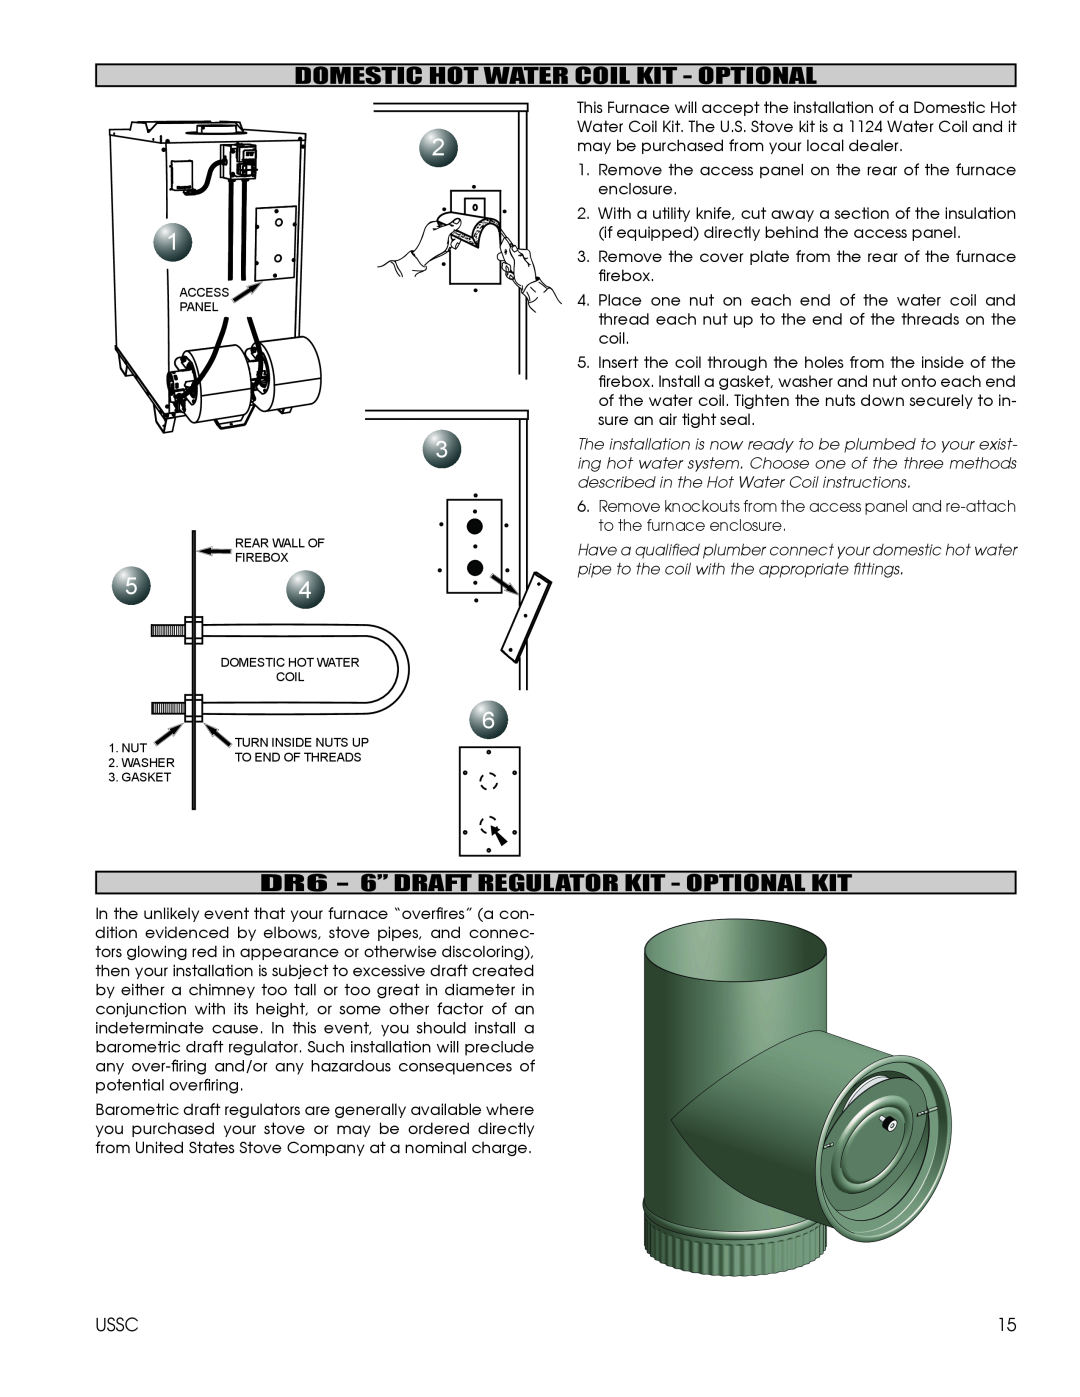 United States Stove 1602G, 1802G Domestic Hot Water Coil Kit - Optional, DR6 - 6” DRAFT REGULATOR KIT - OPTIONAL KIT, Ussc 